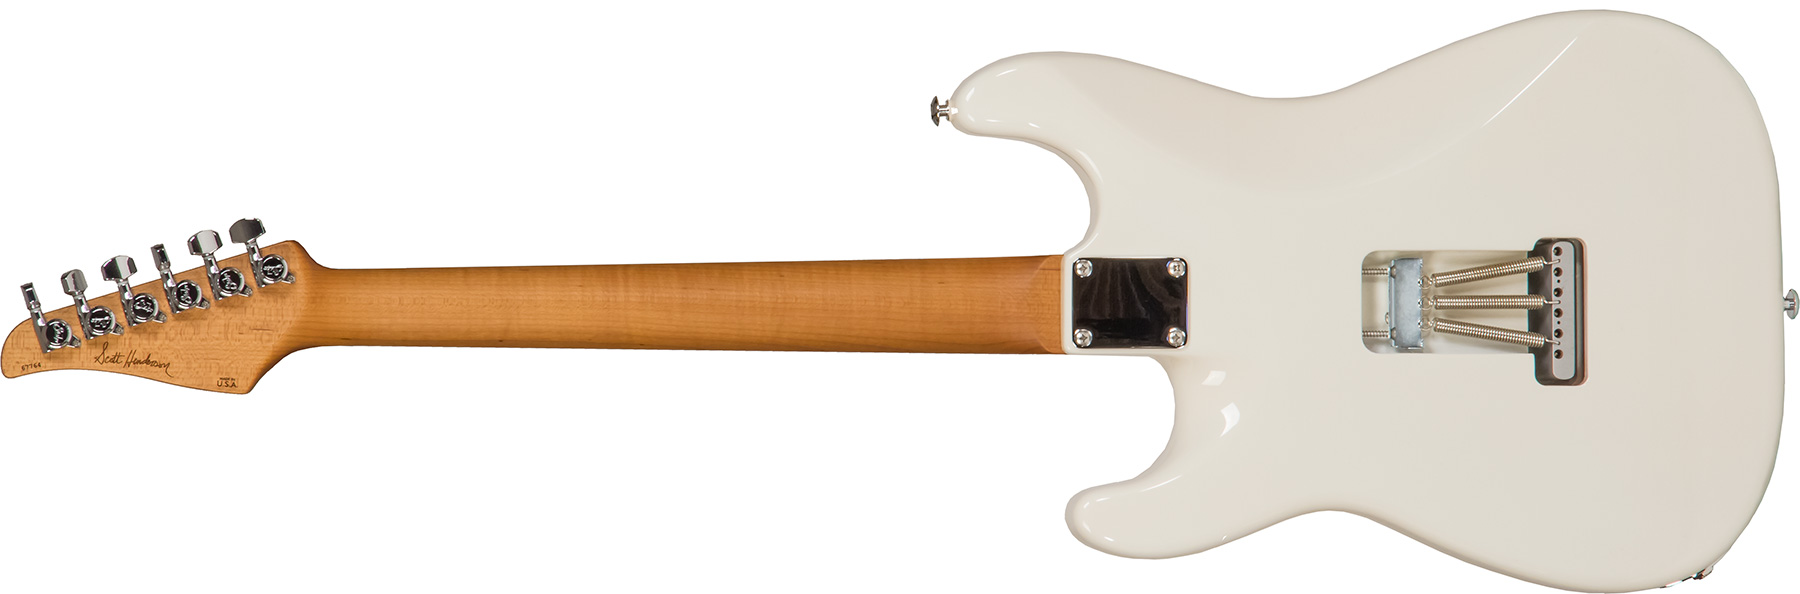 Suhr Scott Henderson Classic S 01-sig-0009 Signature 3s Trem Rw #67764 - Olympic White - Str shape electric guitar - Variation 1